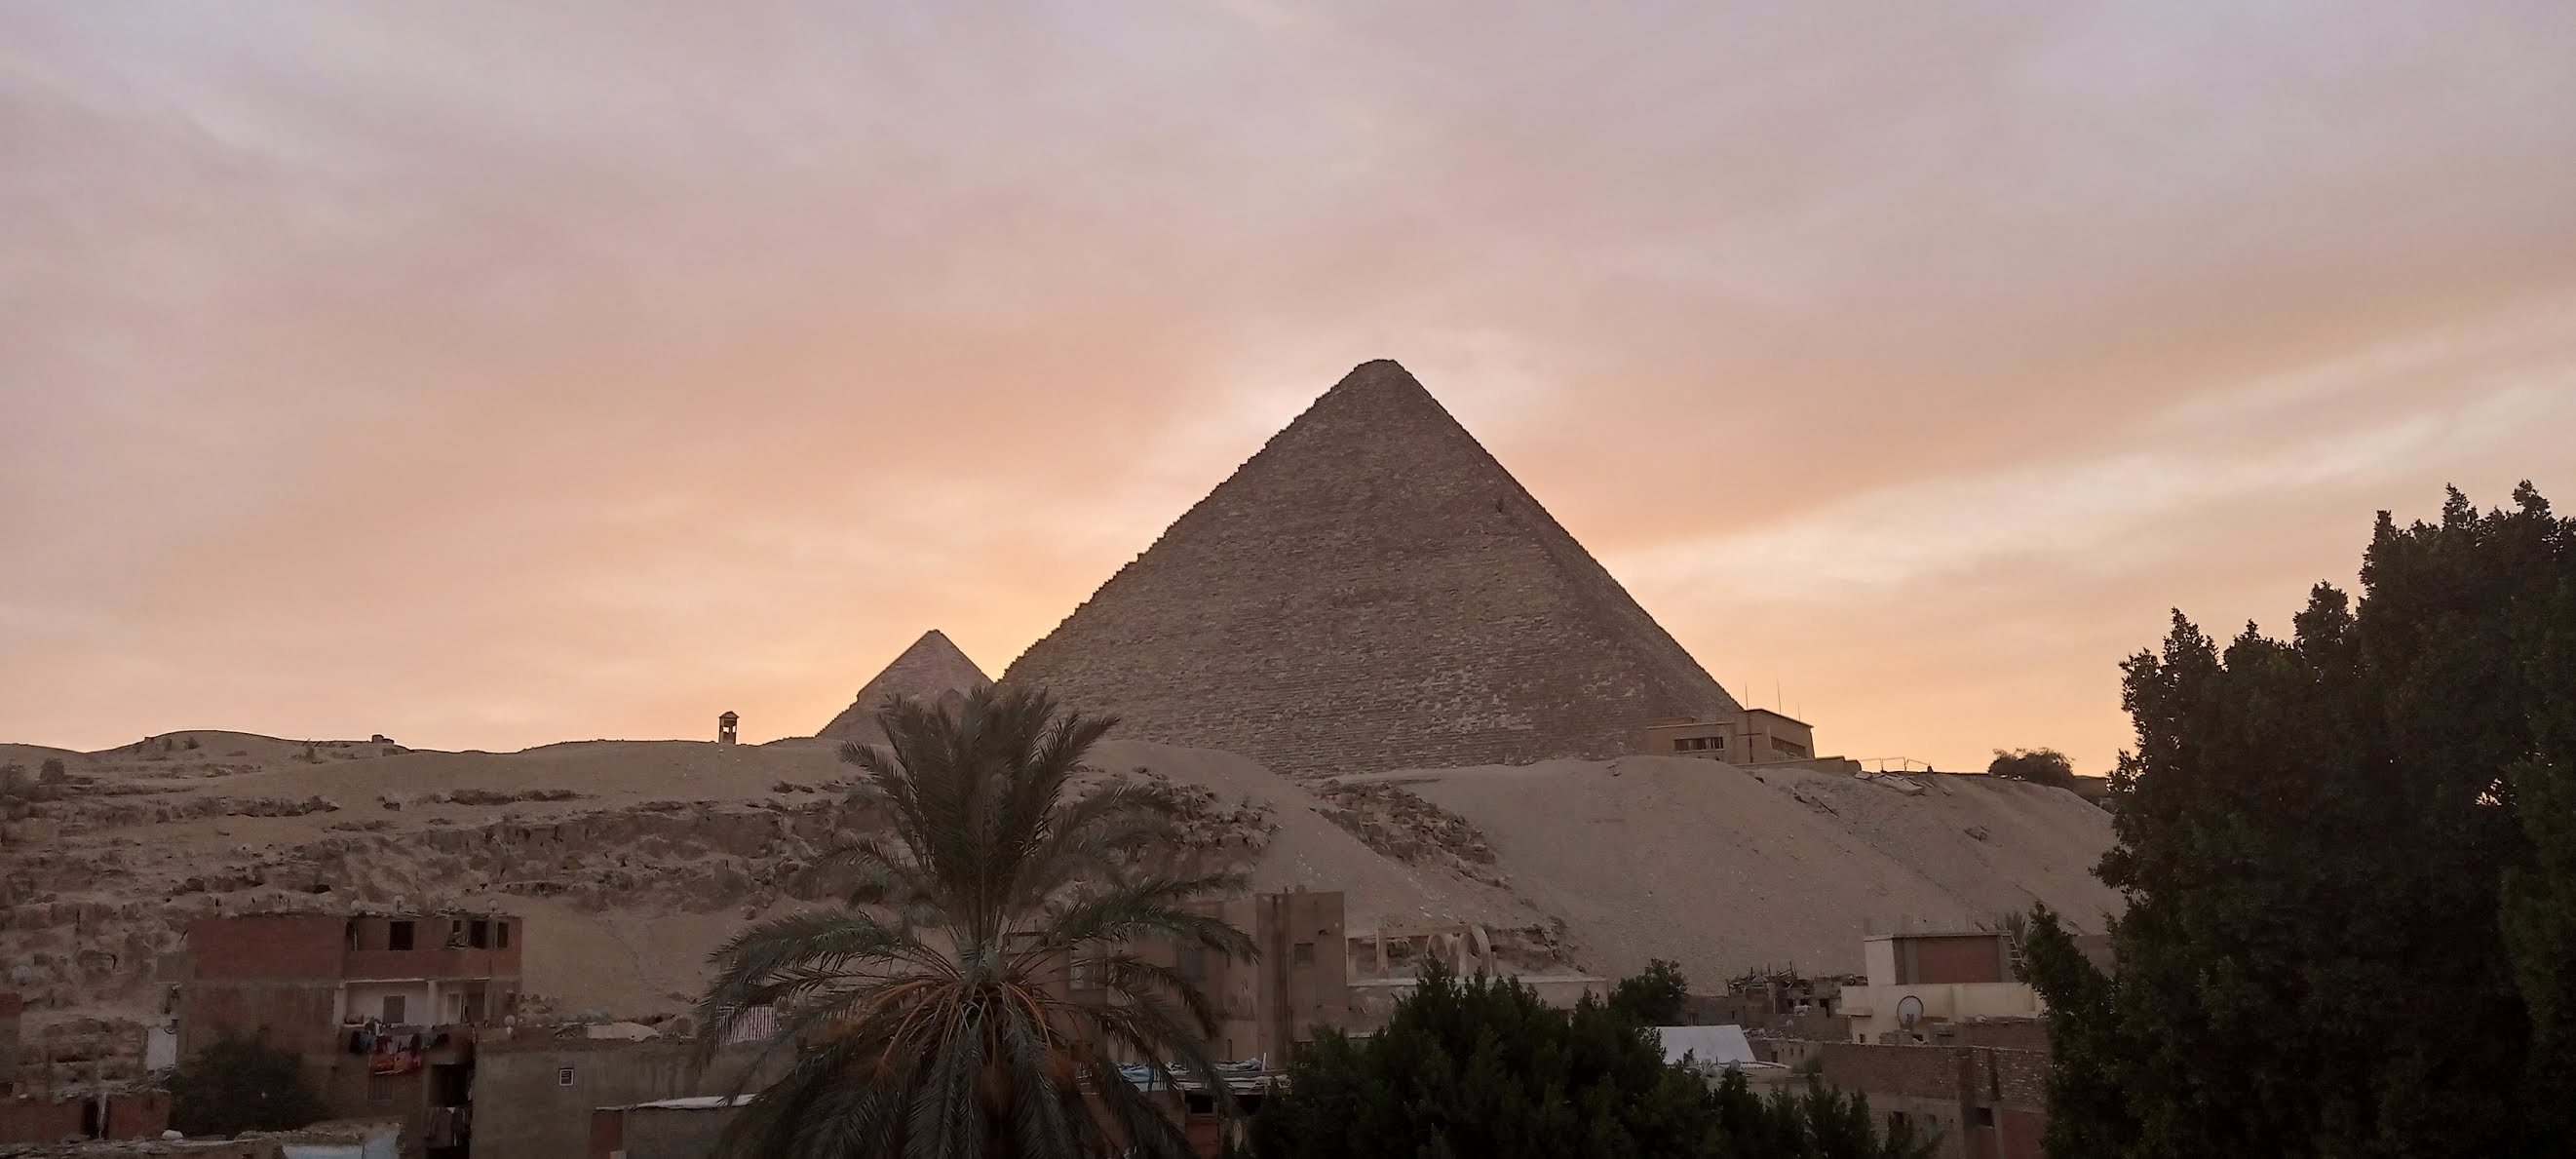 Egypt pyramids free image